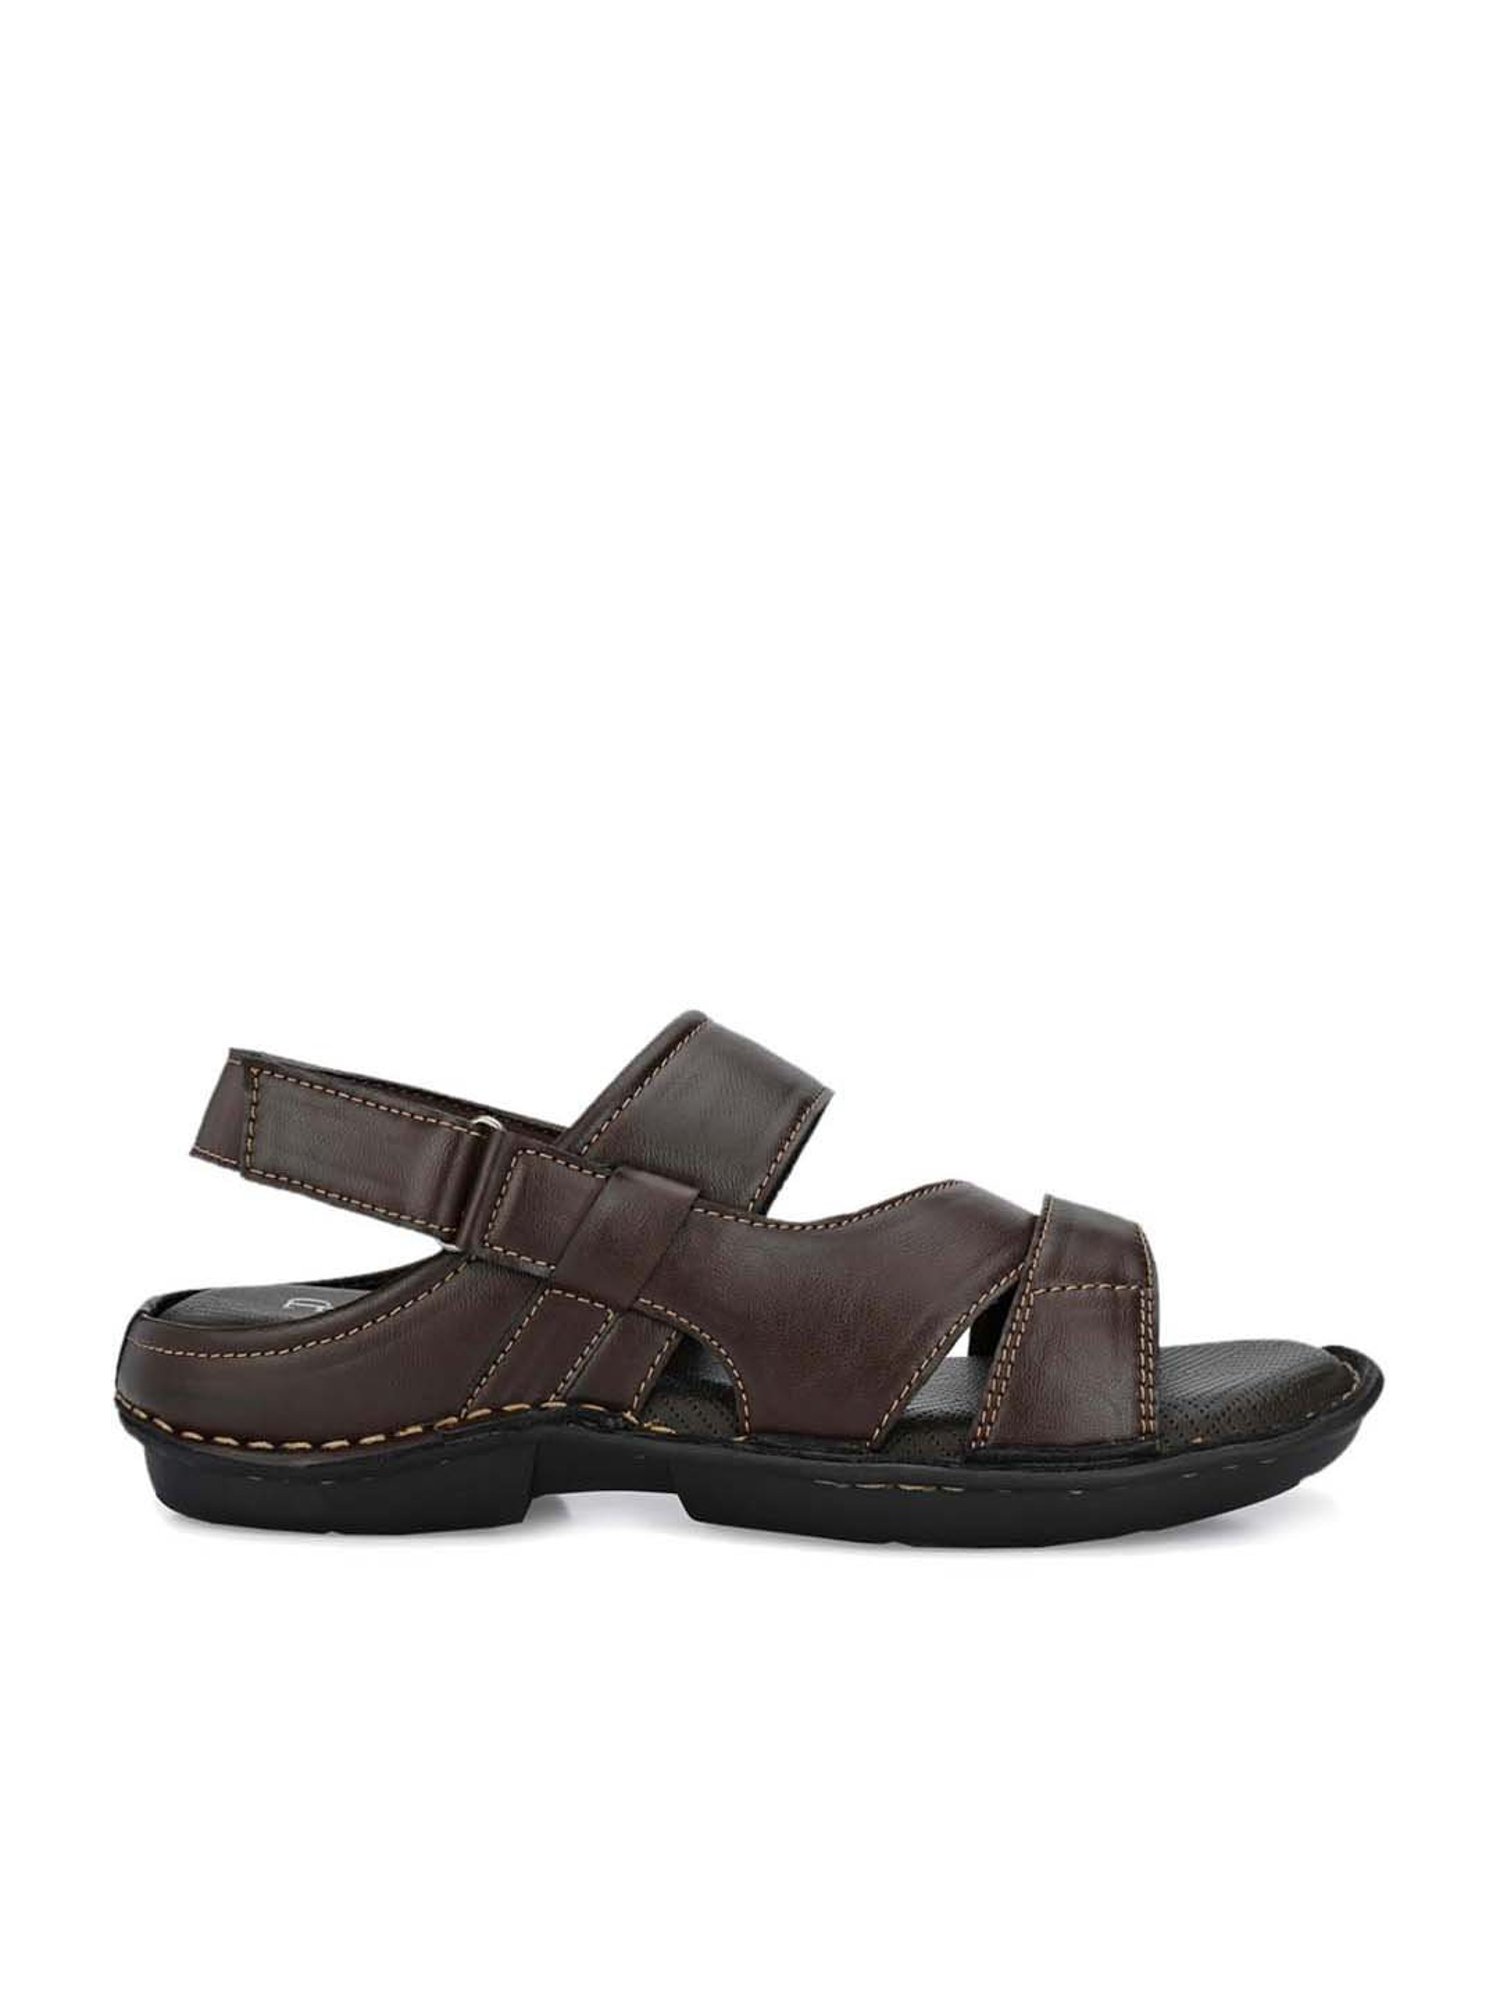 Buy El Paso Men's Brown Back Strap Sandals for Men at Best Price @ Tata CLiQ